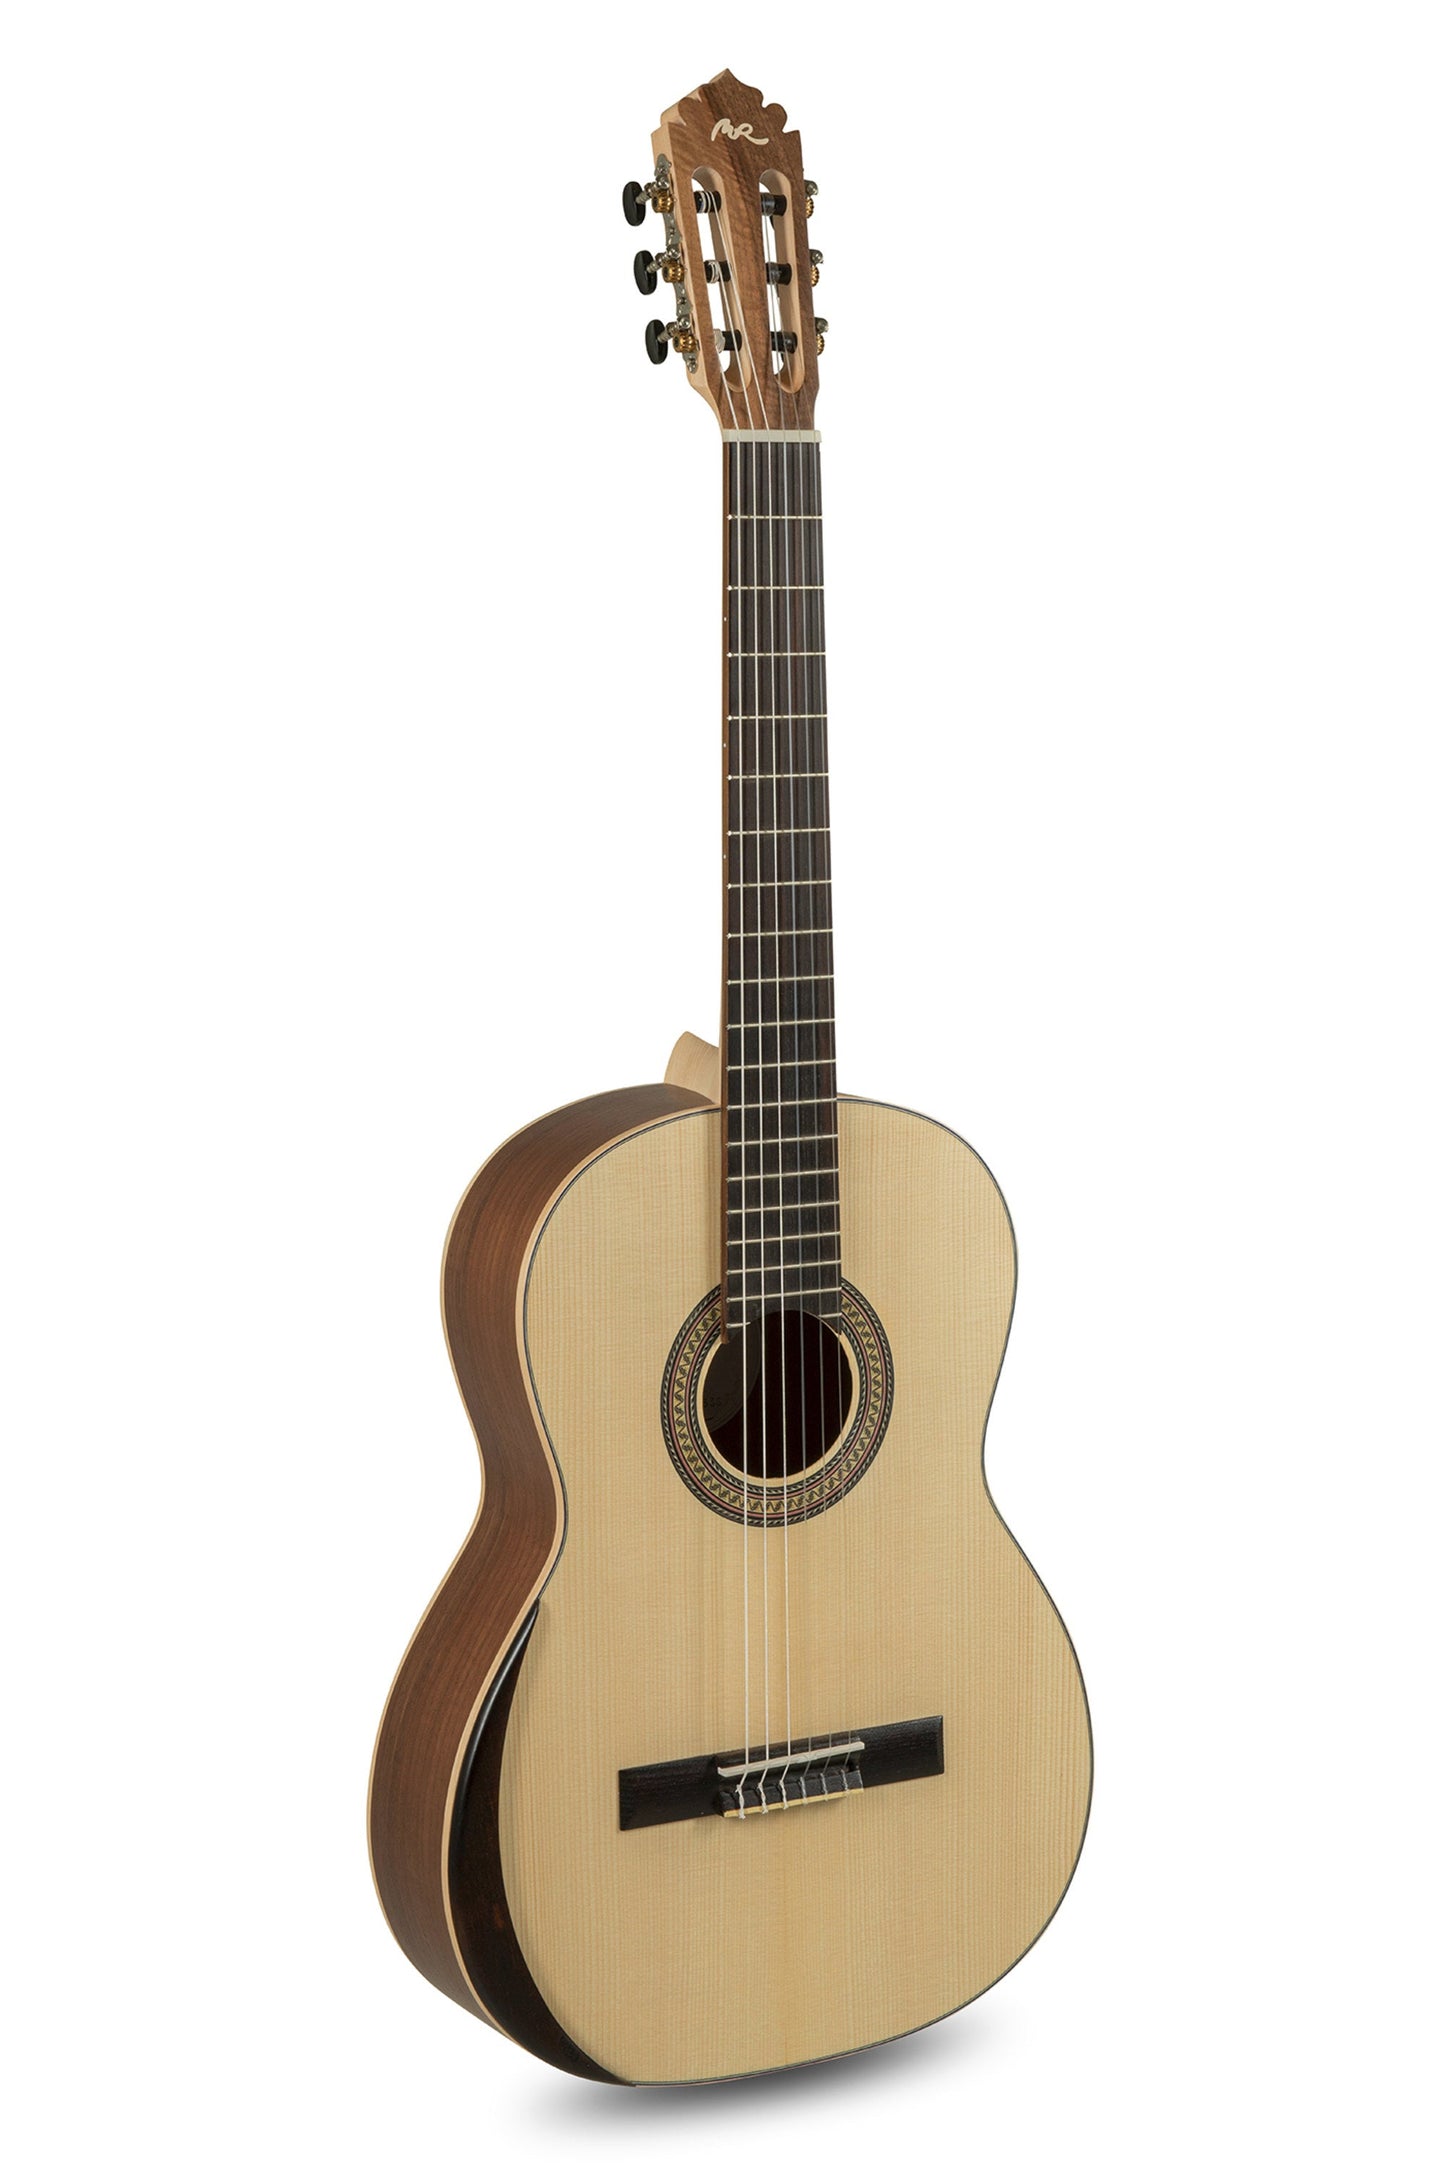 Manuel Rodríguez E-65 Ecología Classical Guitar - Solid Spruce Top